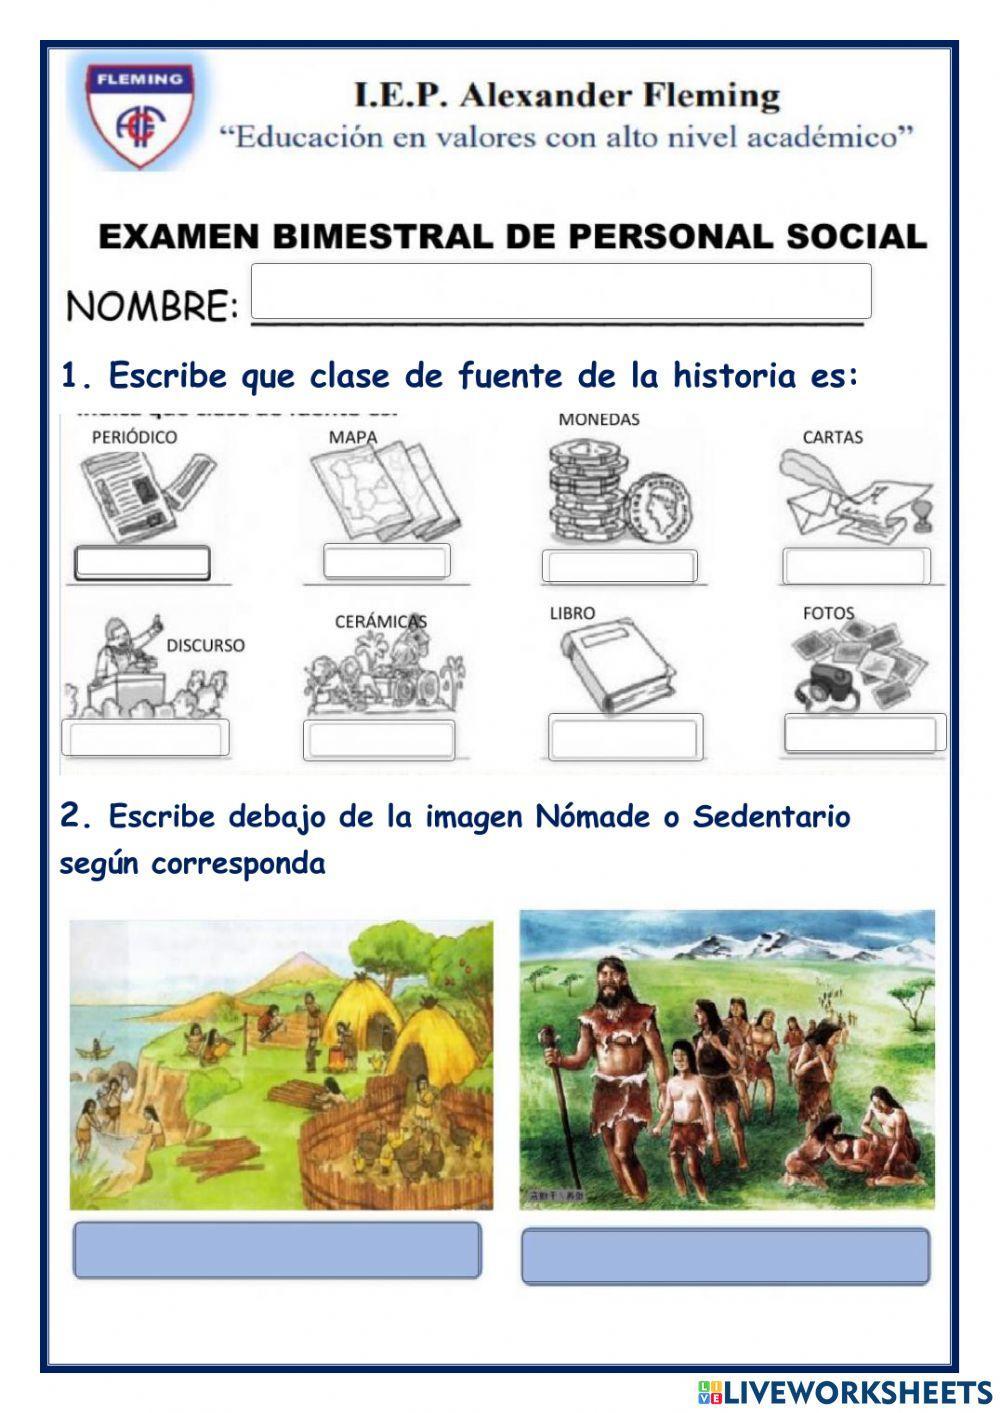 Examen bimestral personal social